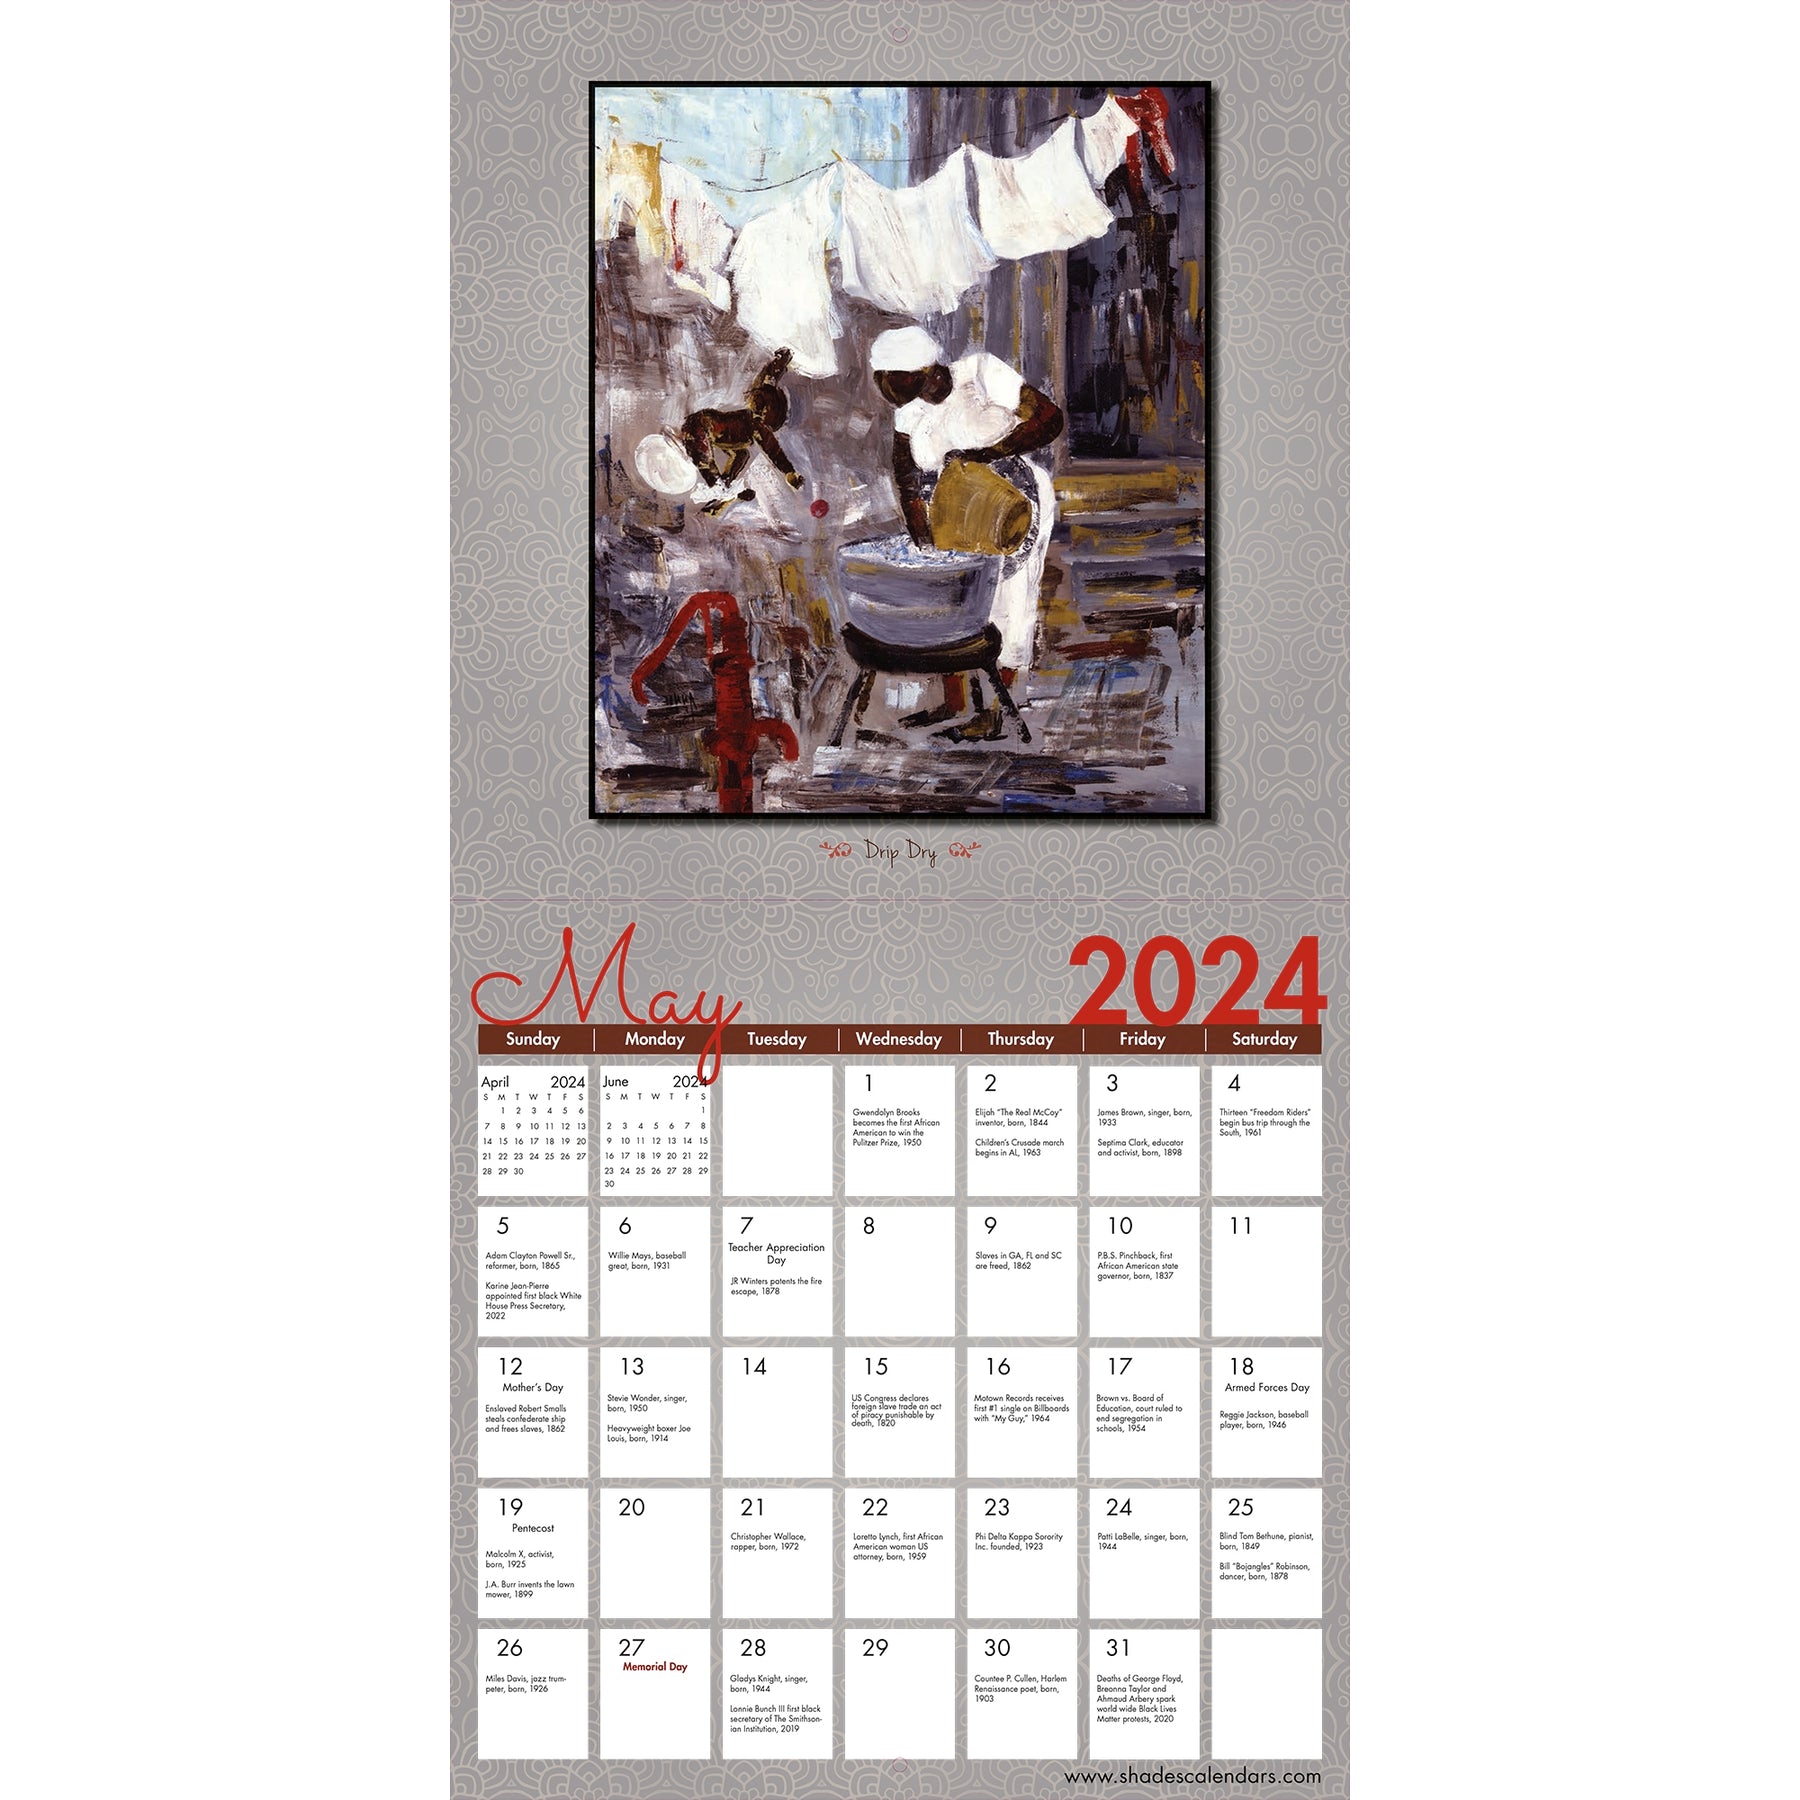 7 of 7: The Art of Annie Lee 2024 African American Wall Calendar (Inside)